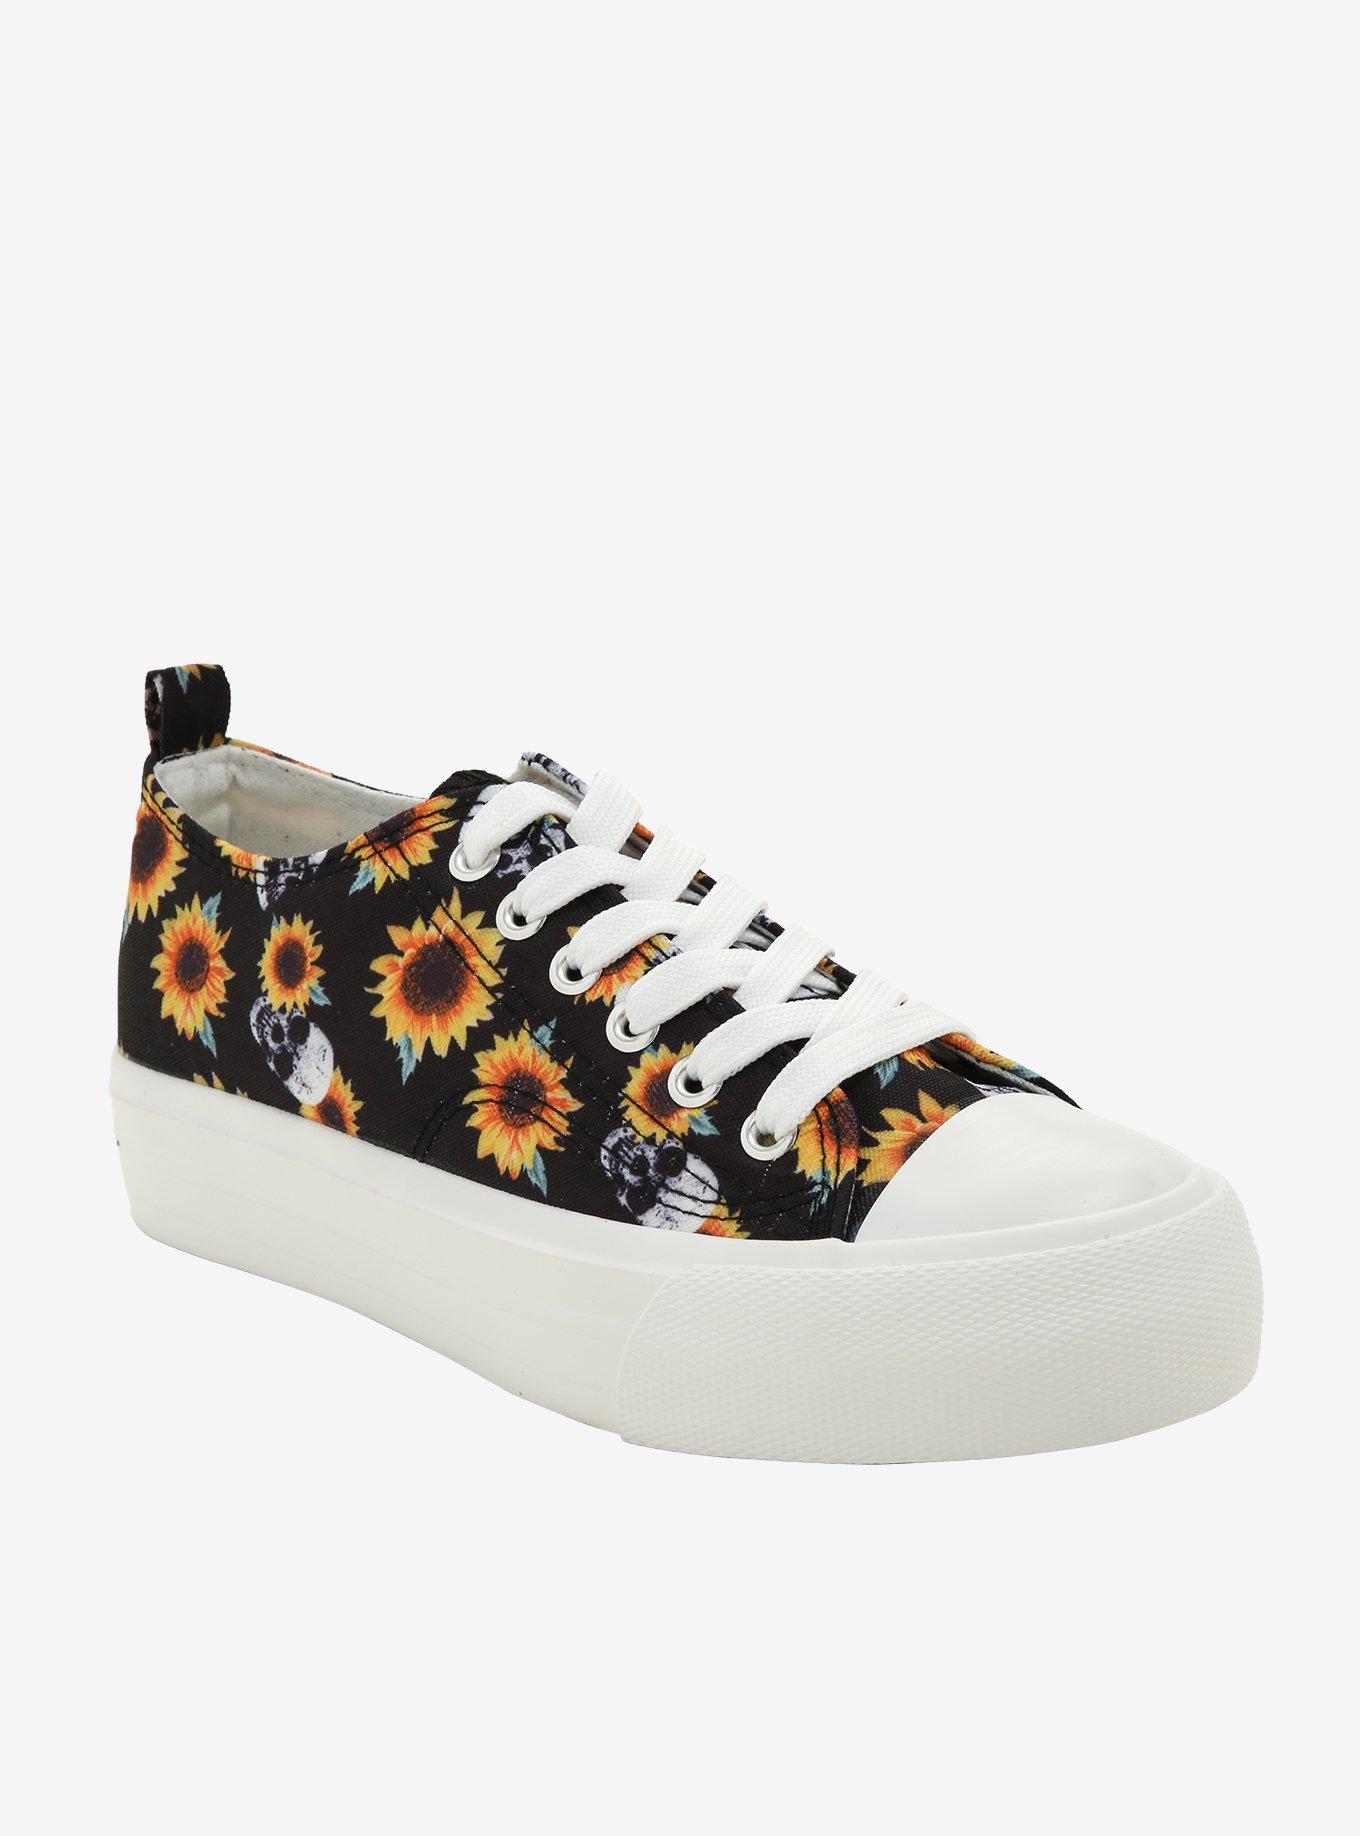 Sunflower Skull Platform Lace-Up Sneakers, MULTI, hi-res